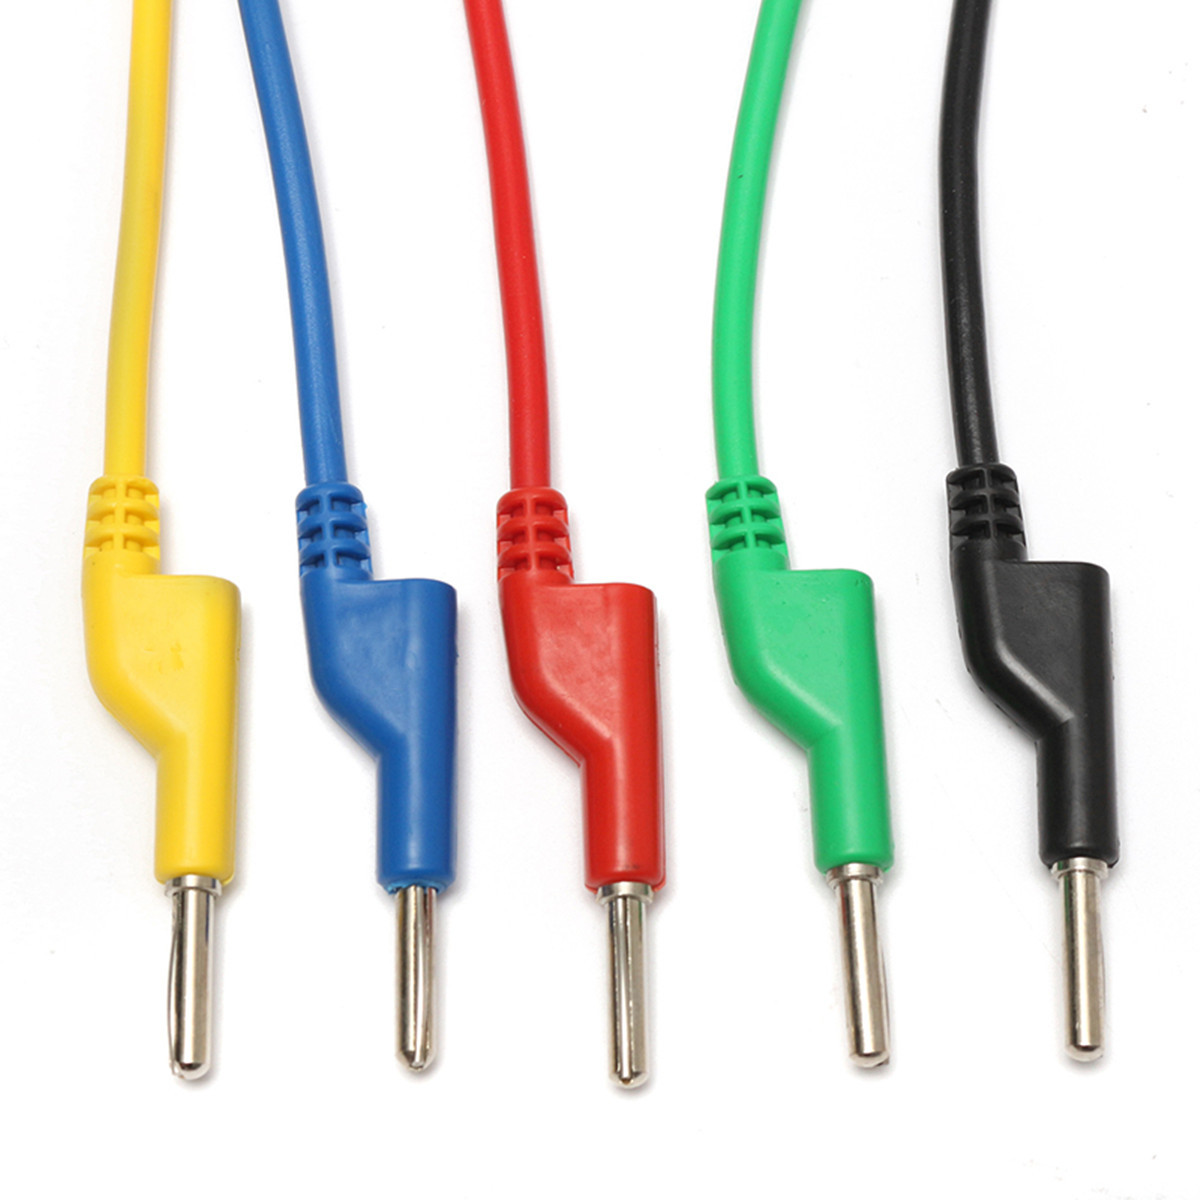 DANIU-5Pcs-5-Colors-Silicone-Banana-to-Banana-Plugs-Test-Probe-Leads-Cable-1157614-4